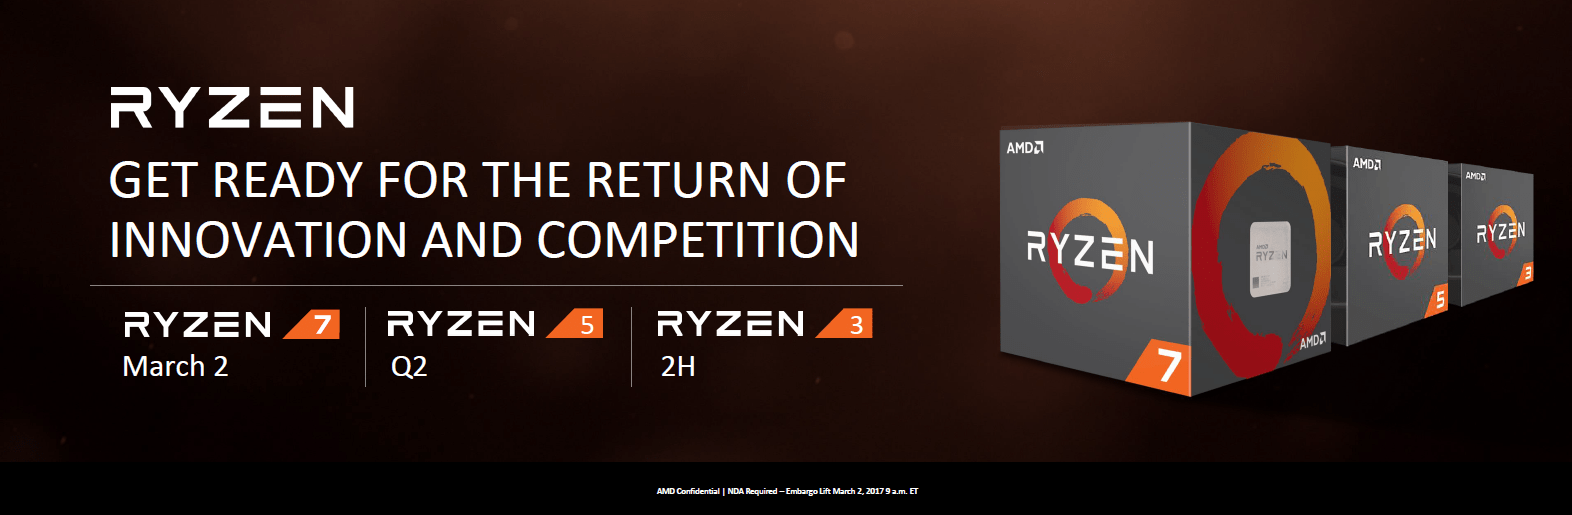 amd ryzen 5 and ryzen 3 series launching in 2 h2 2017 AMD RYZEN 5 1600X Review